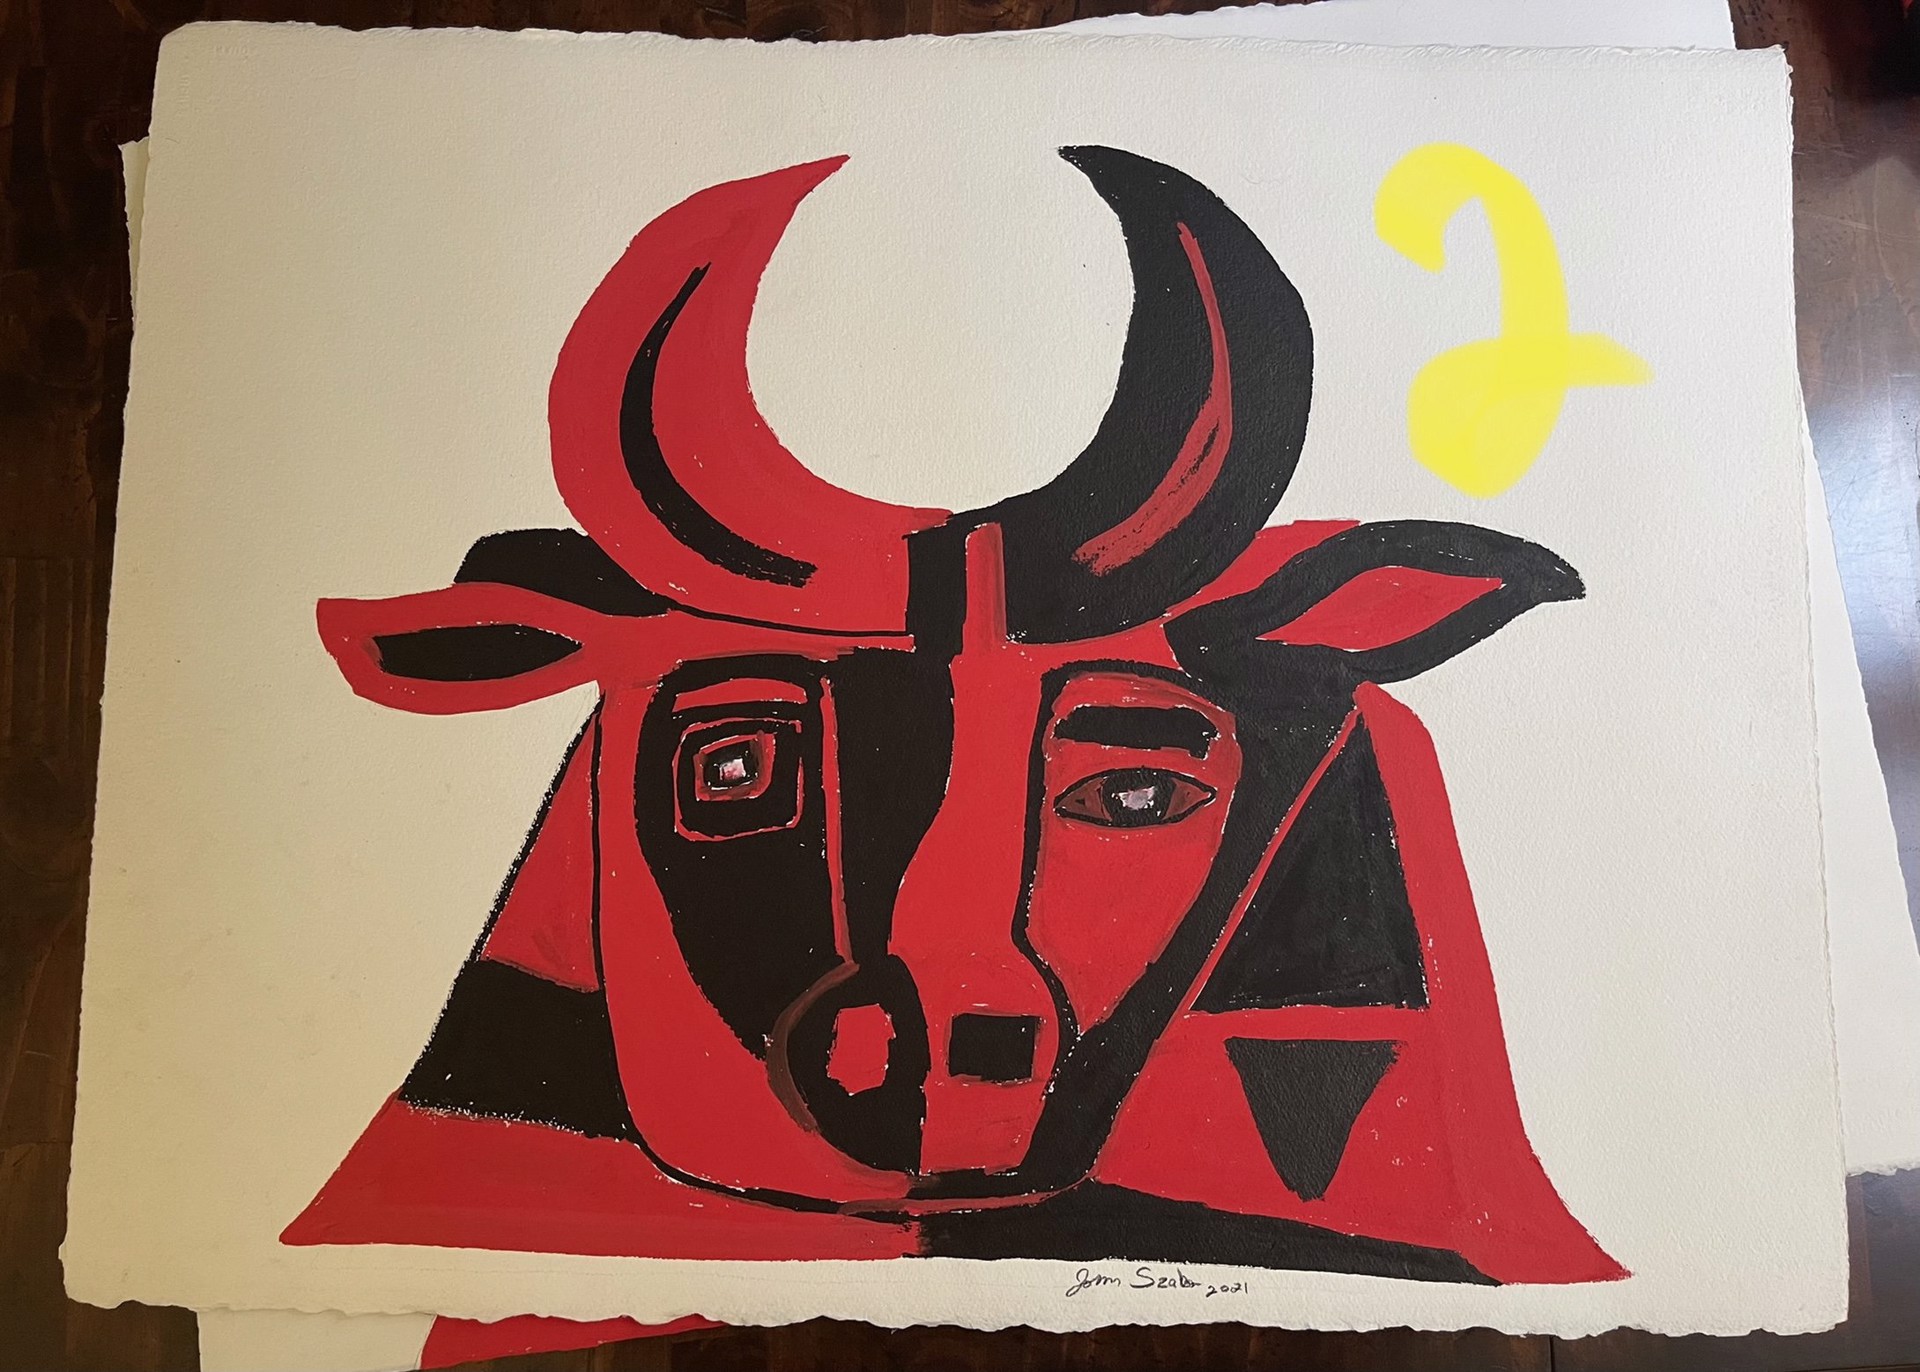 Bull by John Szabo